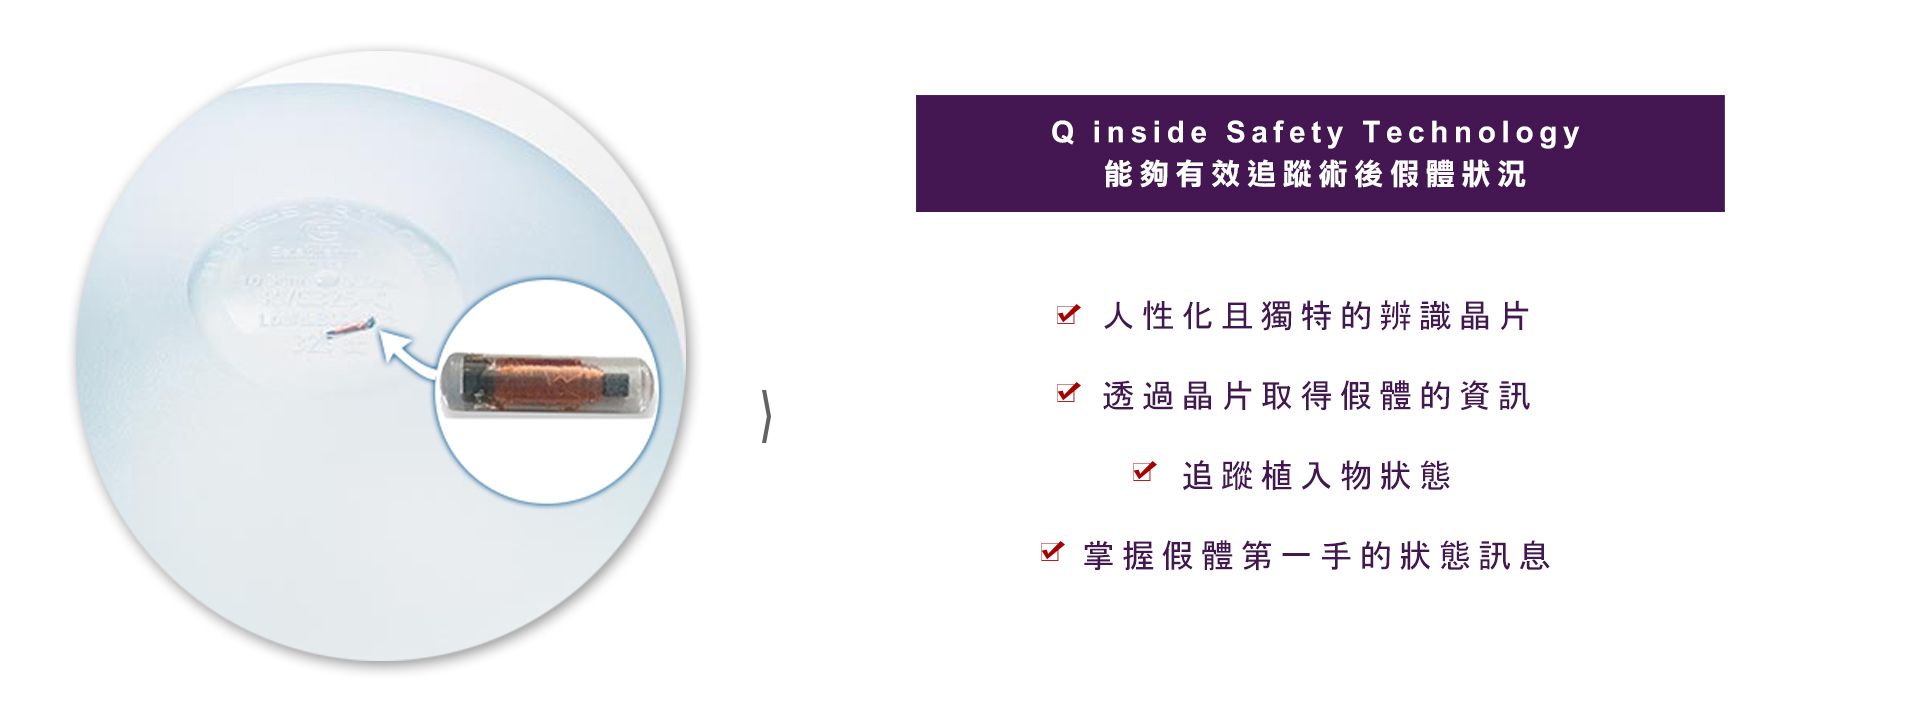 Q inside Safety Technology 能夠有效追蹤術後假體狀況  魔滴隆乳採用美國FDA核可用於人體微型的安全晶片置放於假體內，人性化且獨特的辨識晶片